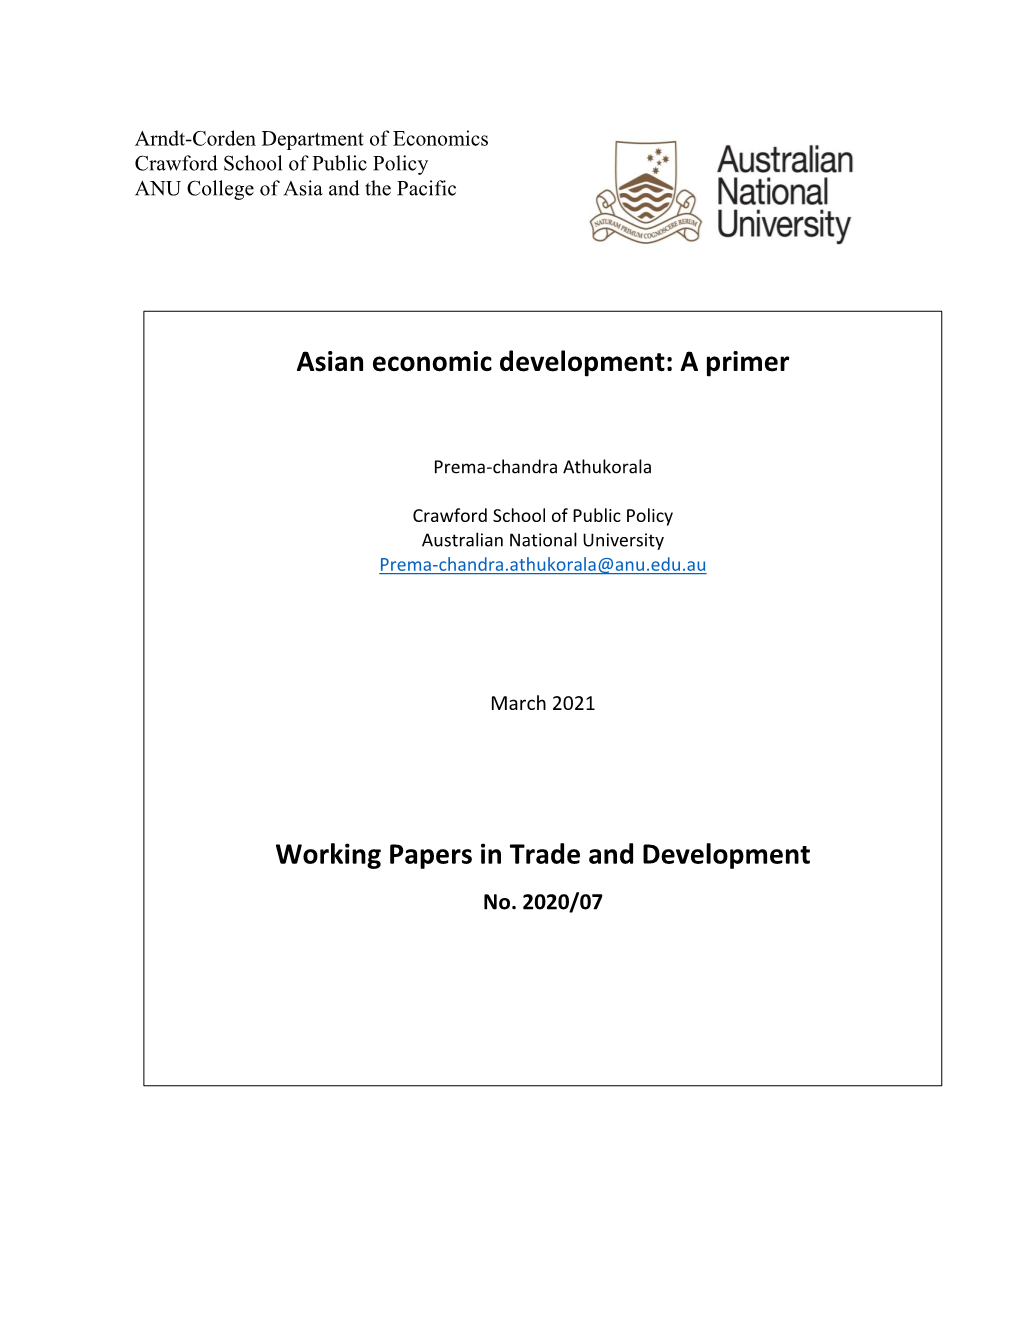 Asian Economic Development: a Primer